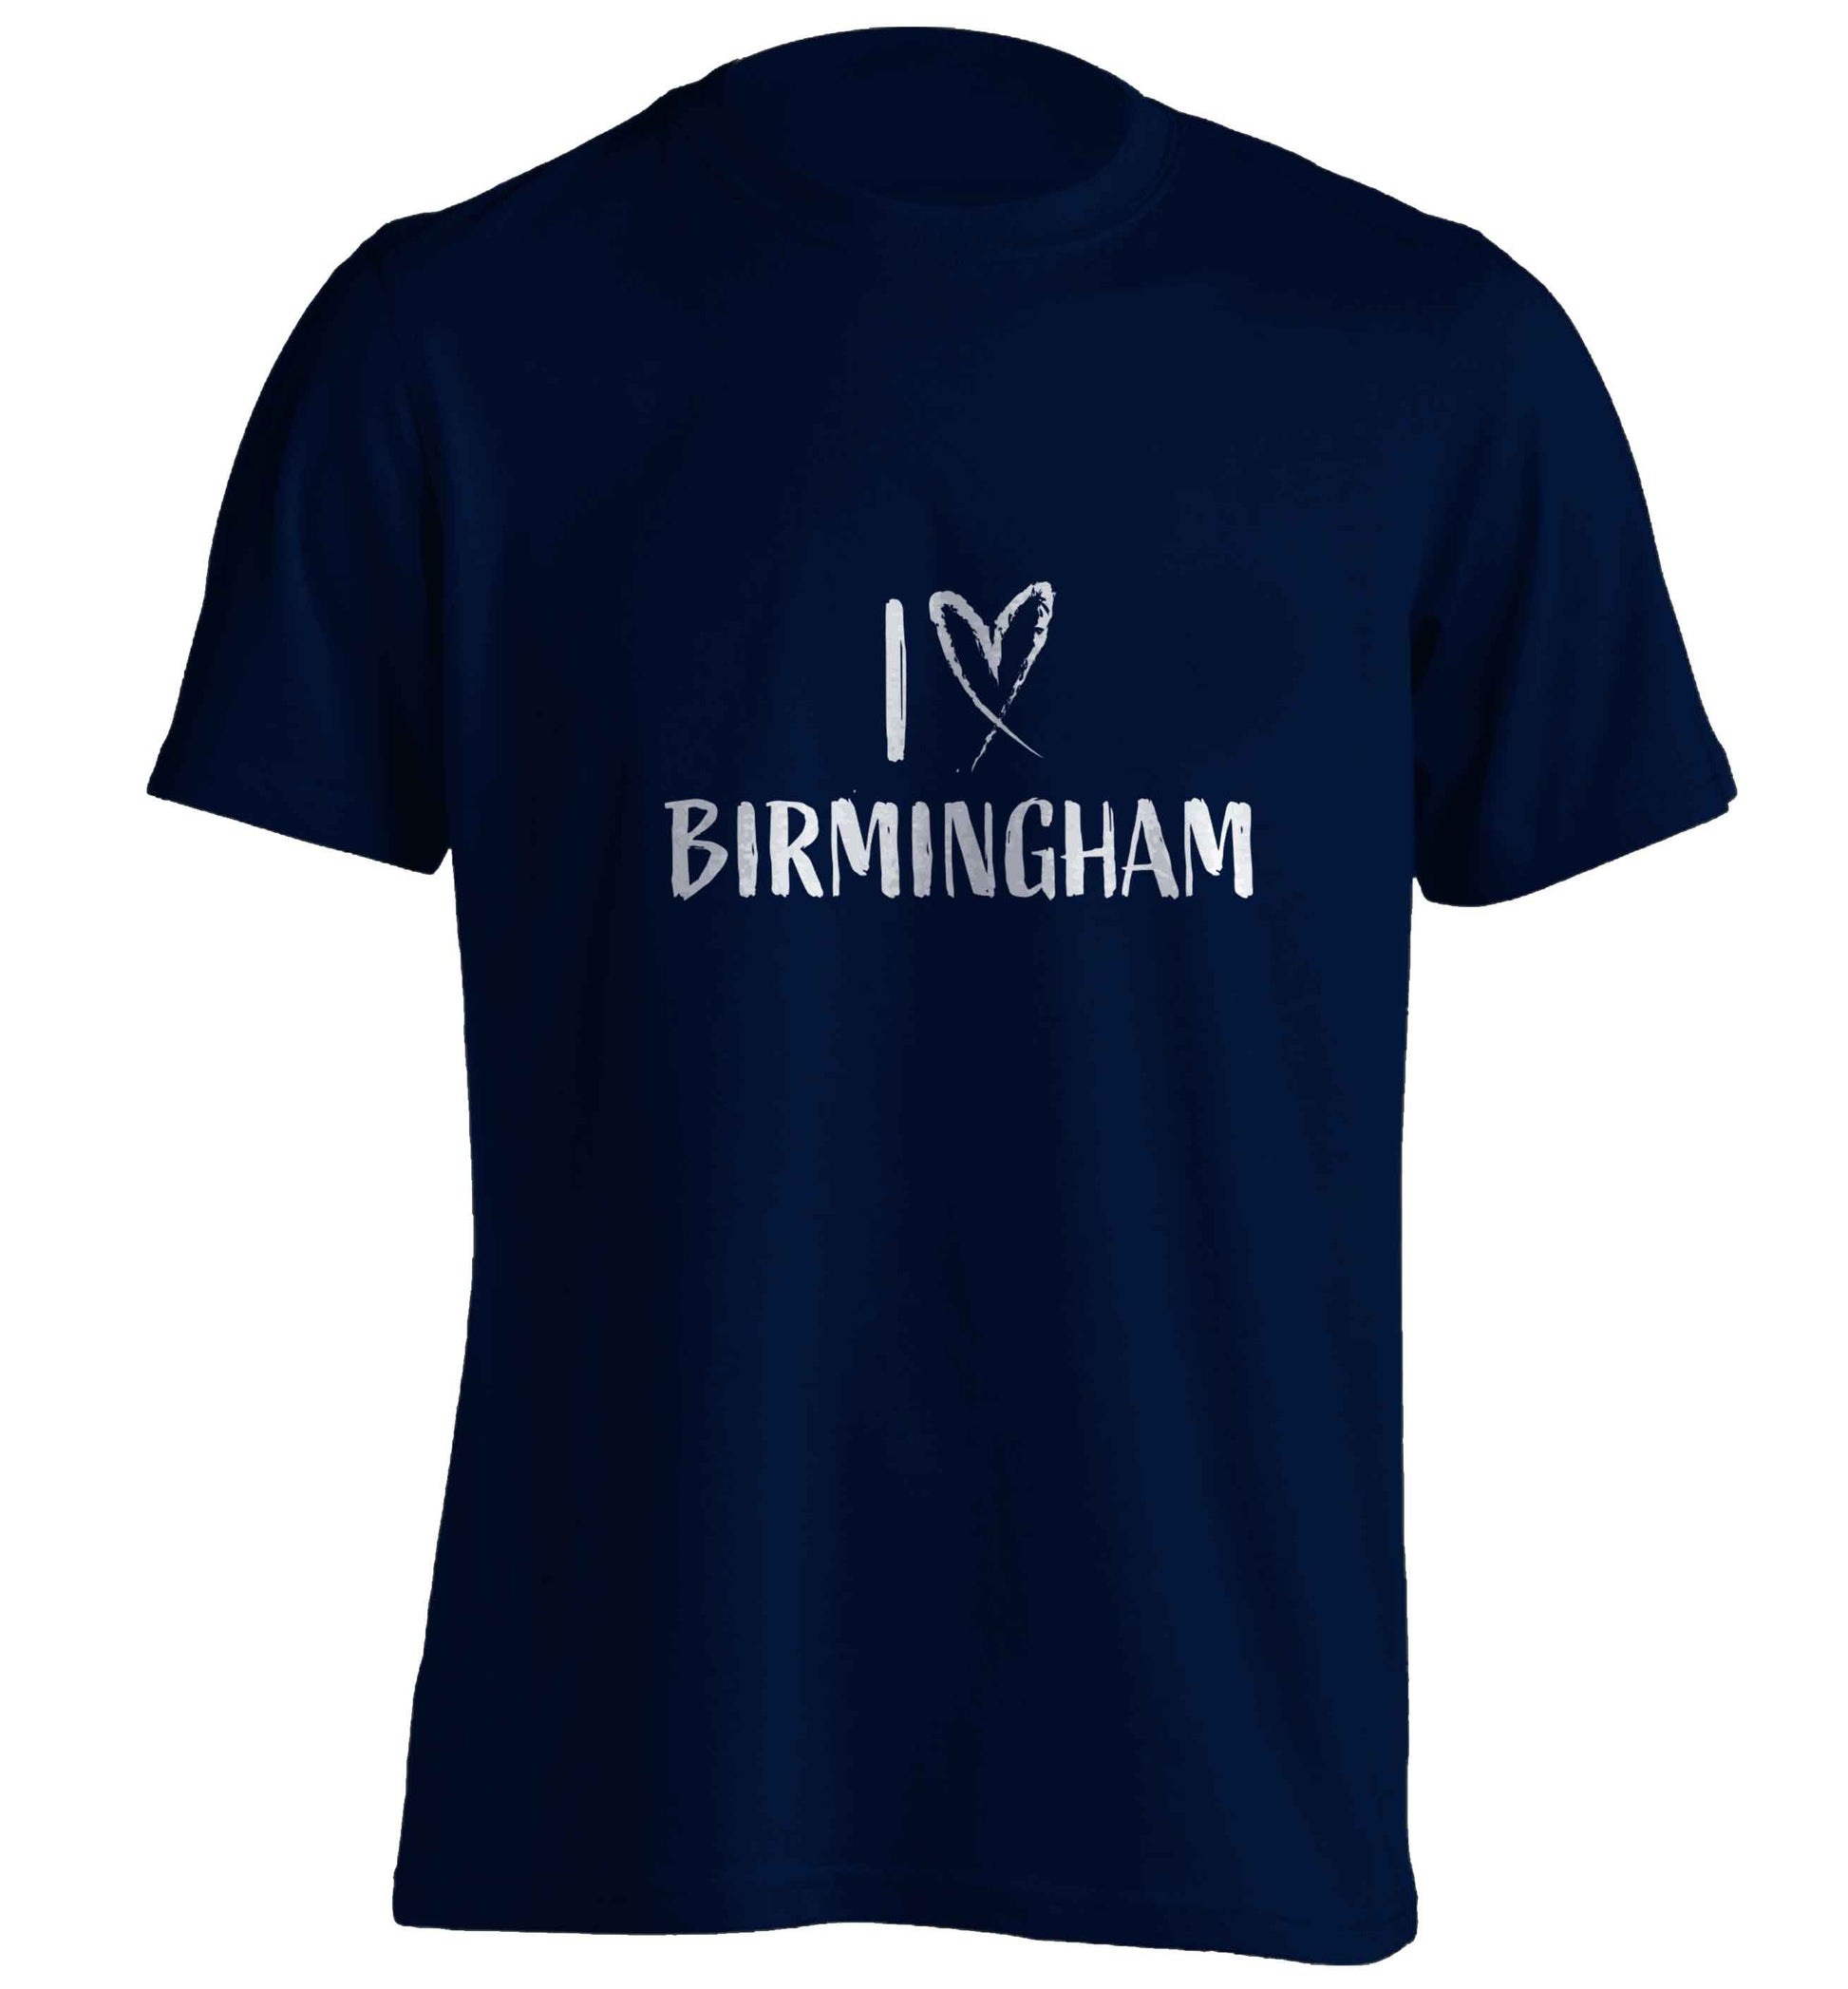 I love Birmingham adults unisex navy Tshirt 2XL